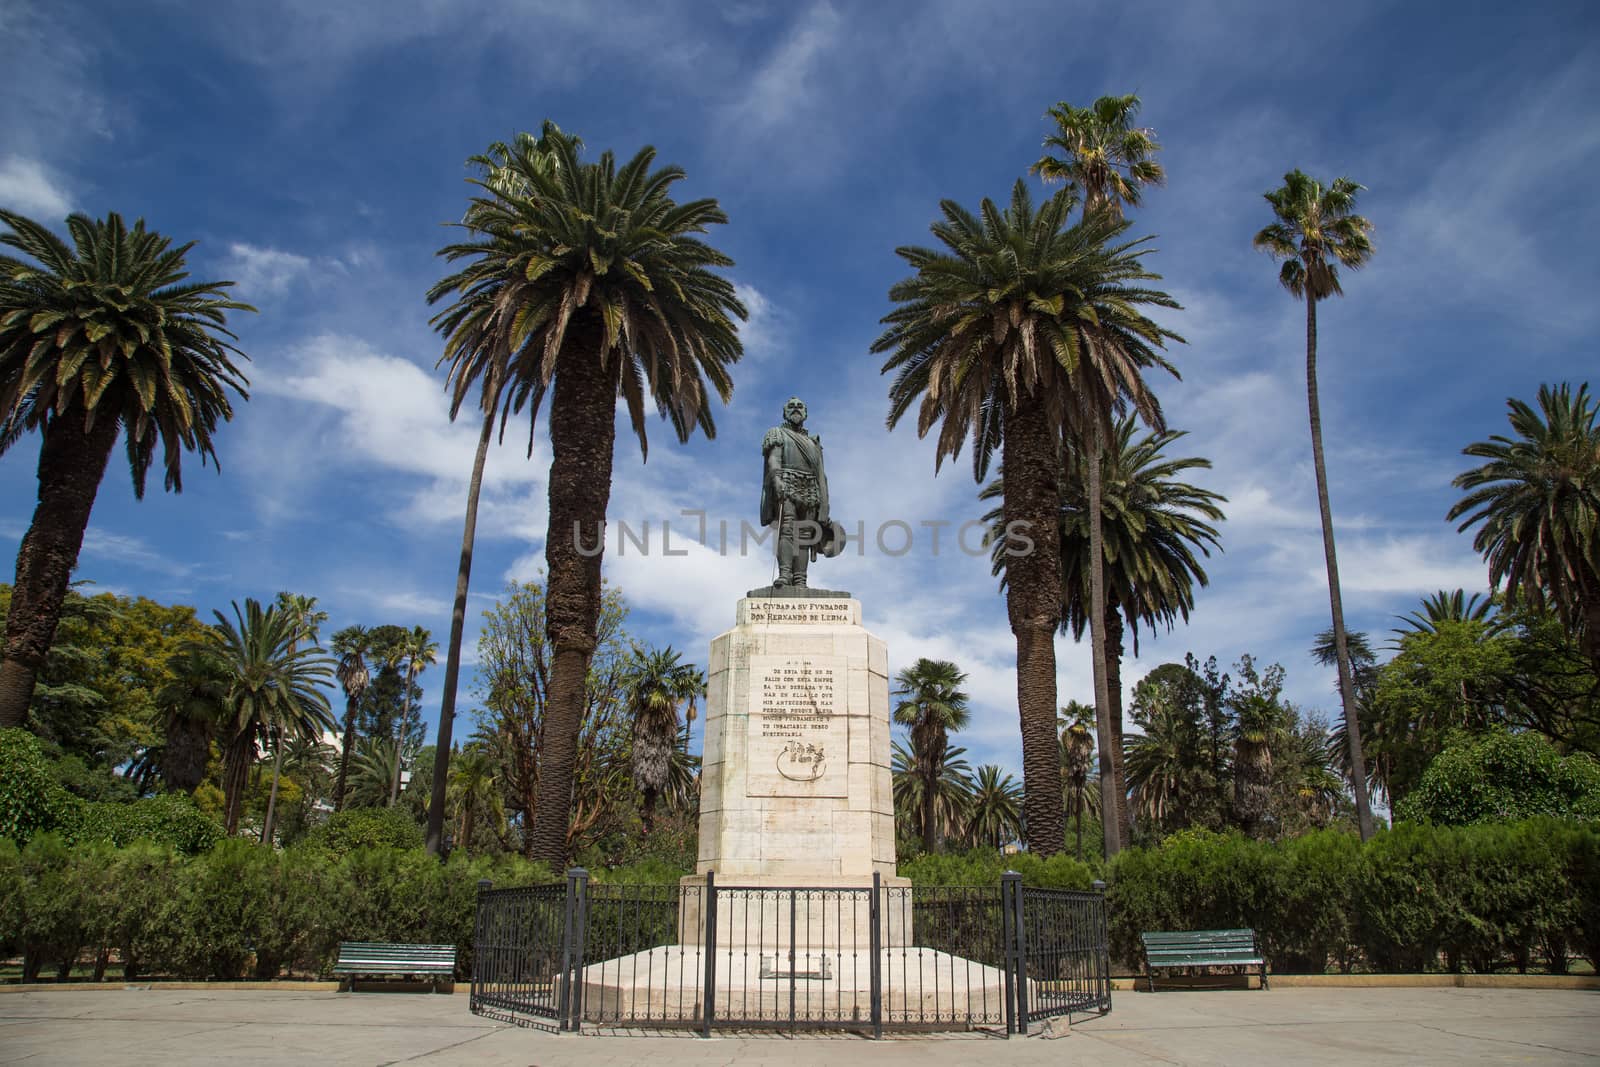 Salta, Argentina - November 12, 2015: Photograph of the statue representing the founder of town Hernando de Lerma.